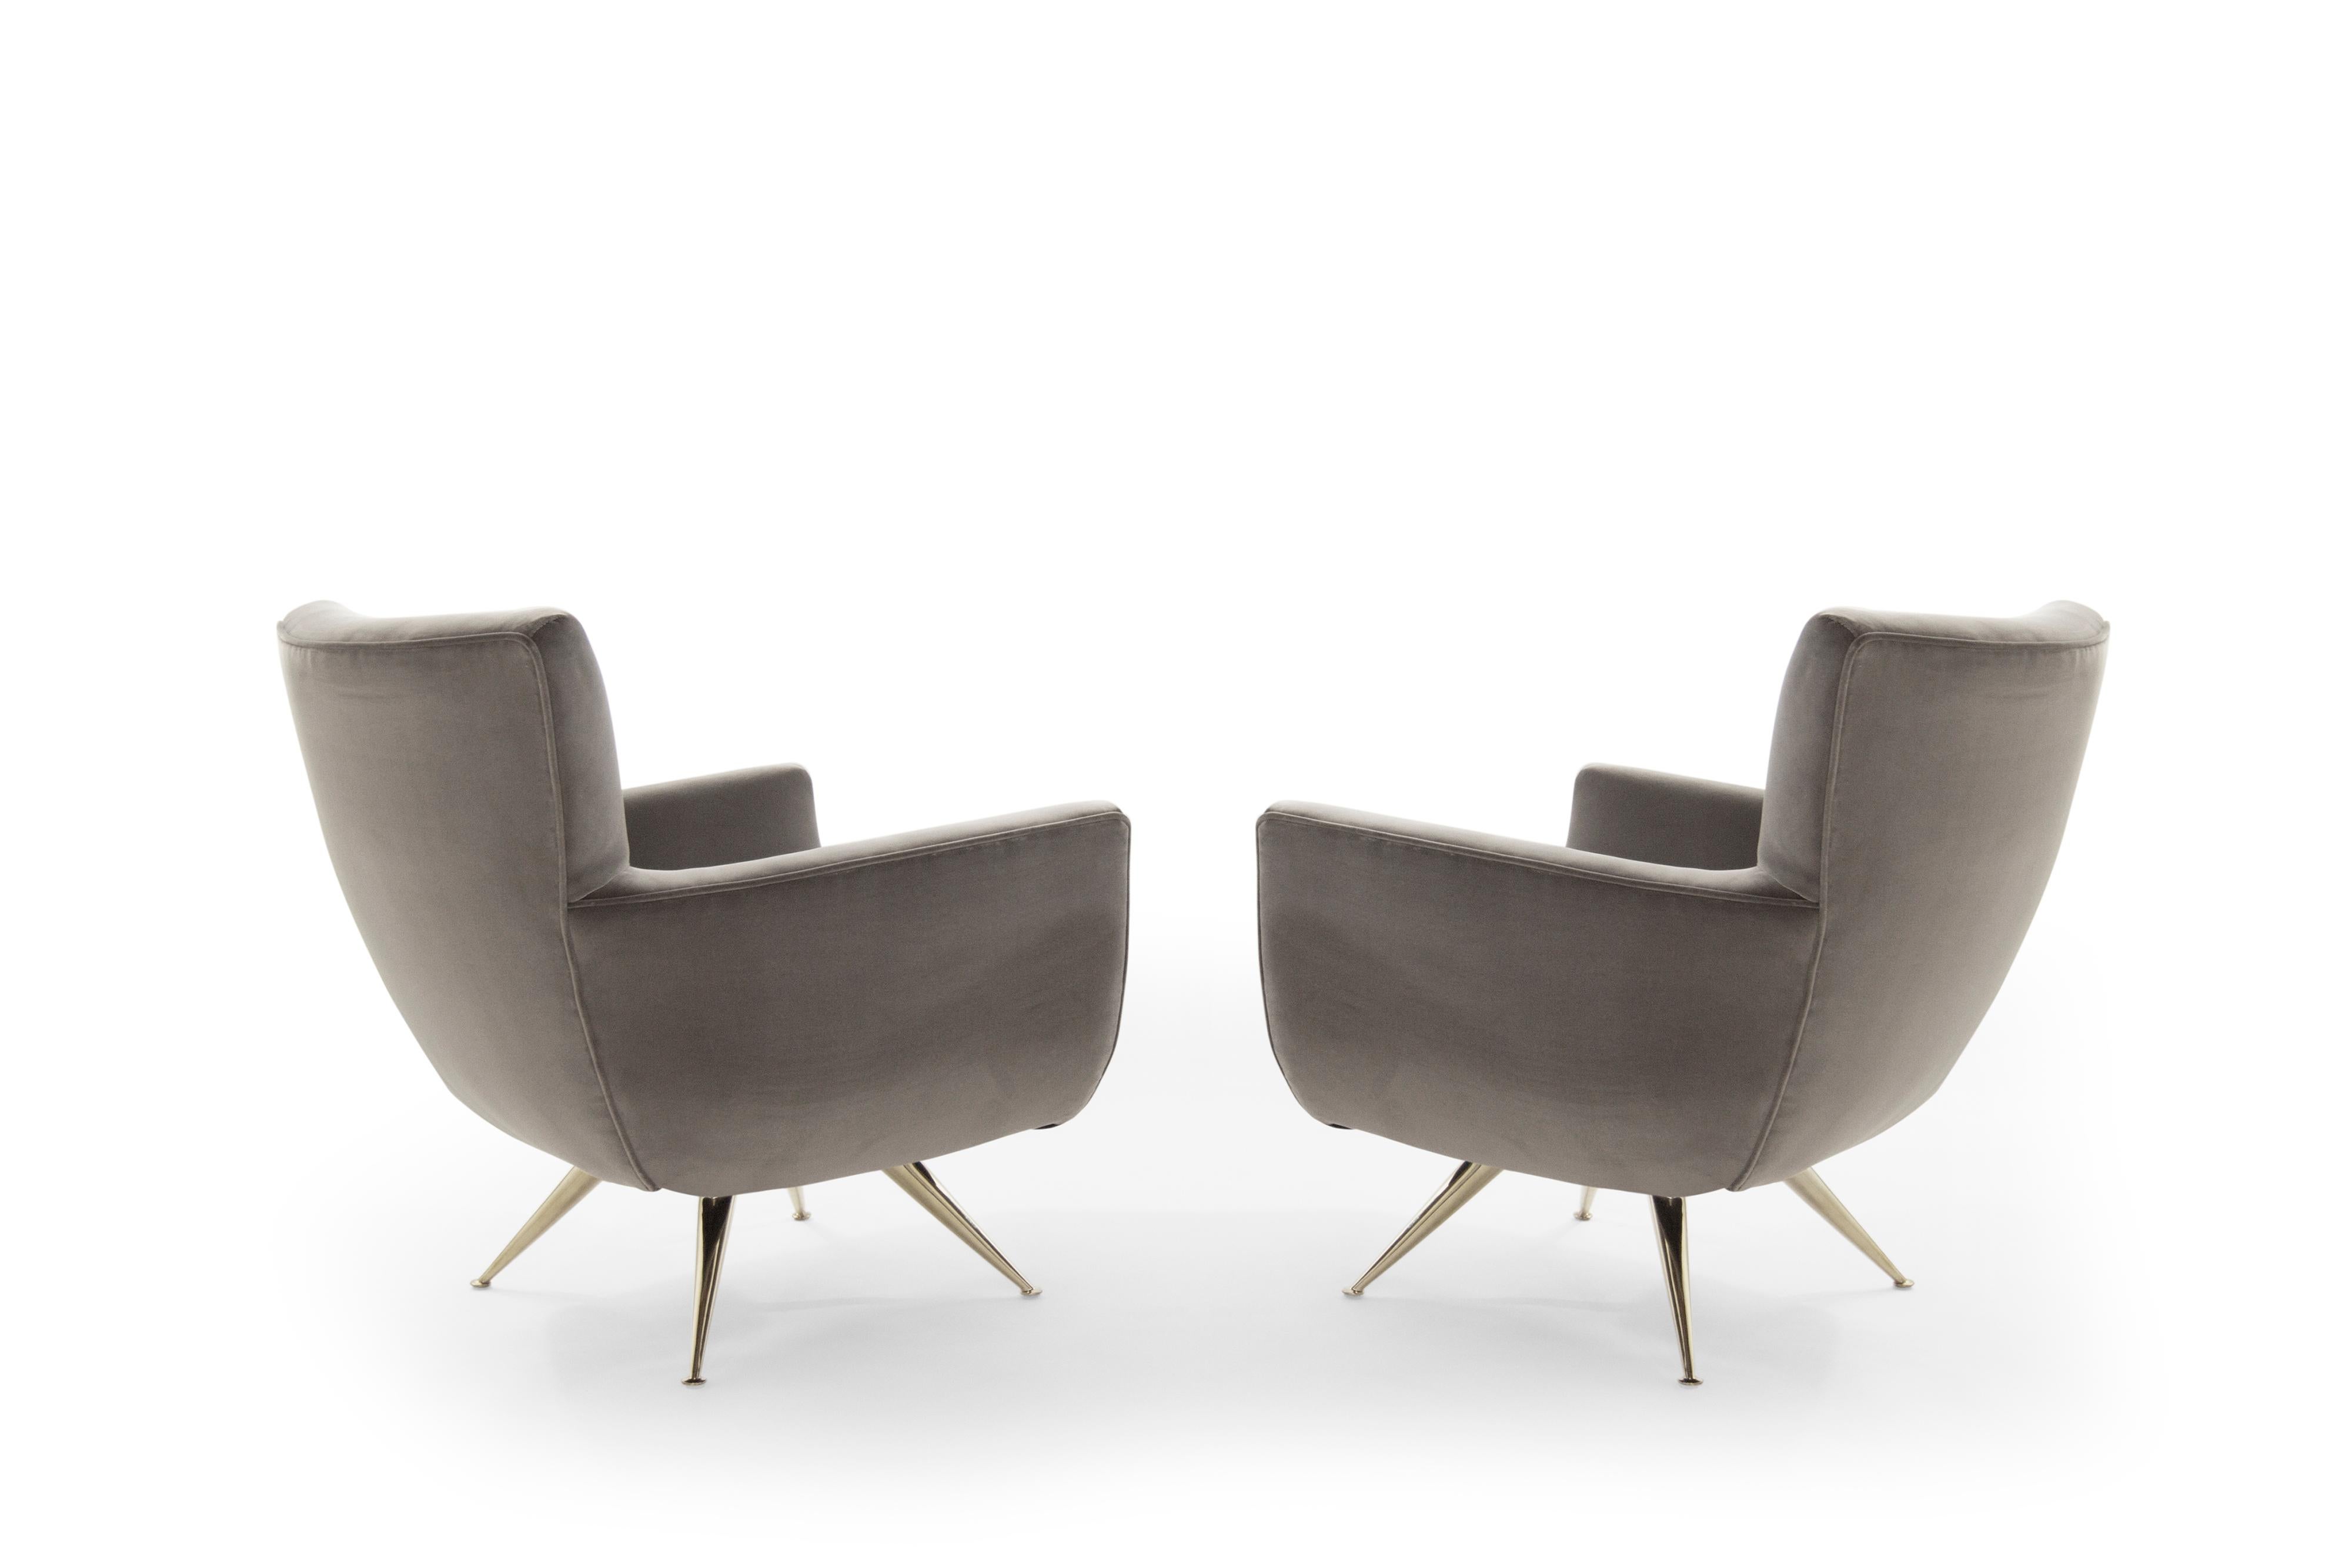 American Mid-Century Modern Swivel Chairs by Henry Glass in Grey Velvet